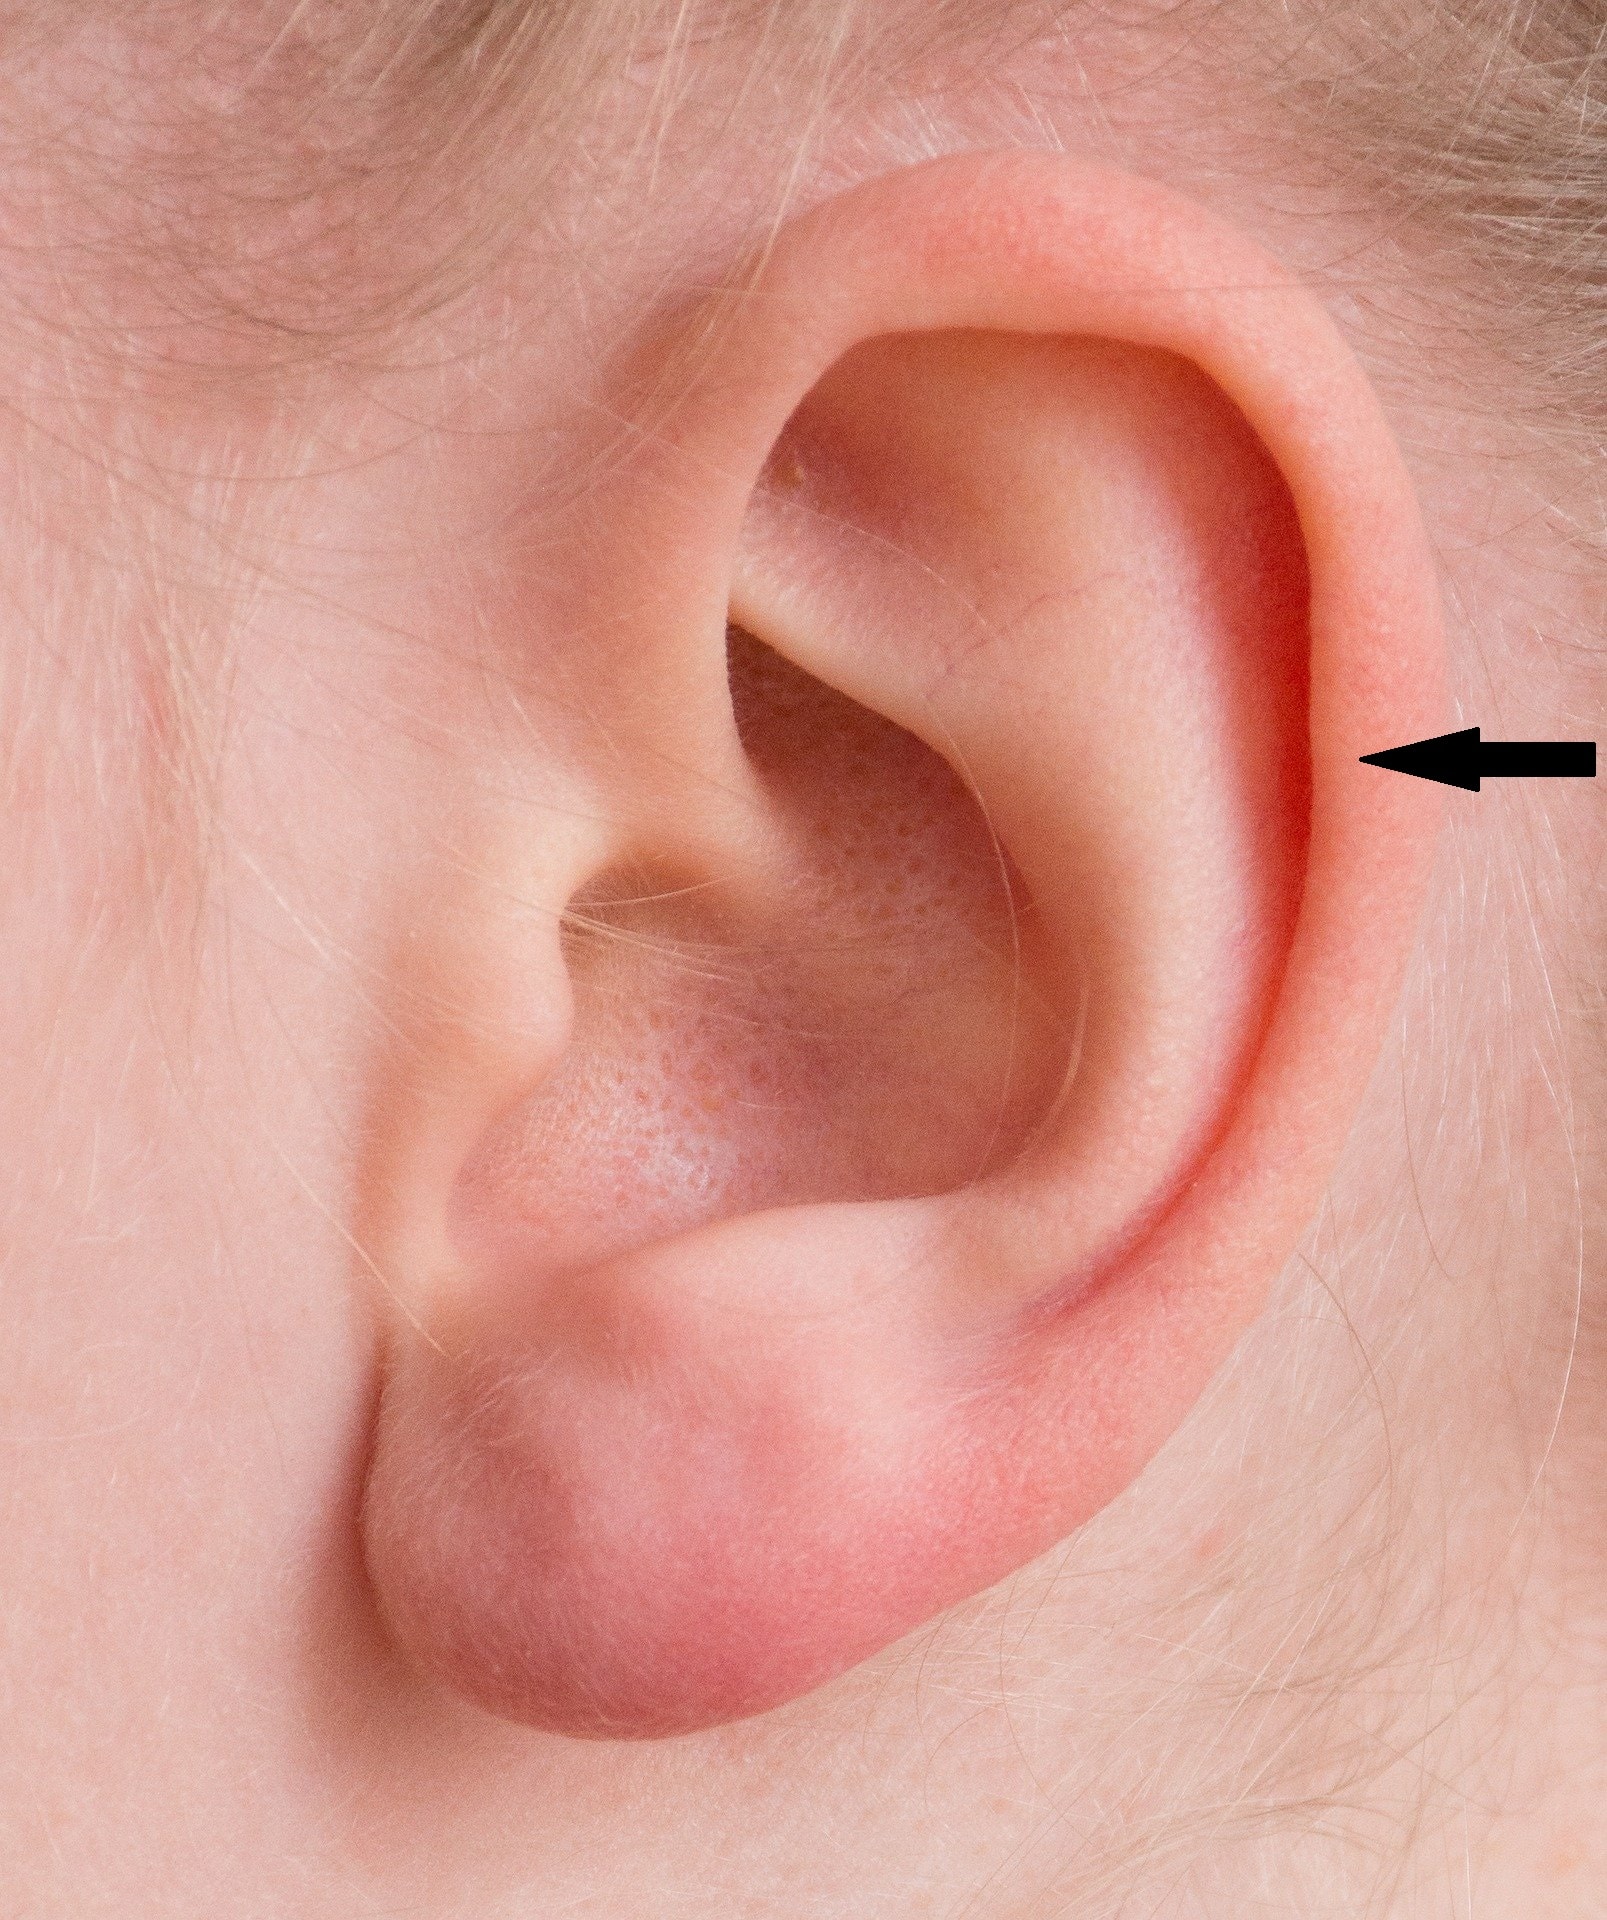 Auricle piercing location in ear